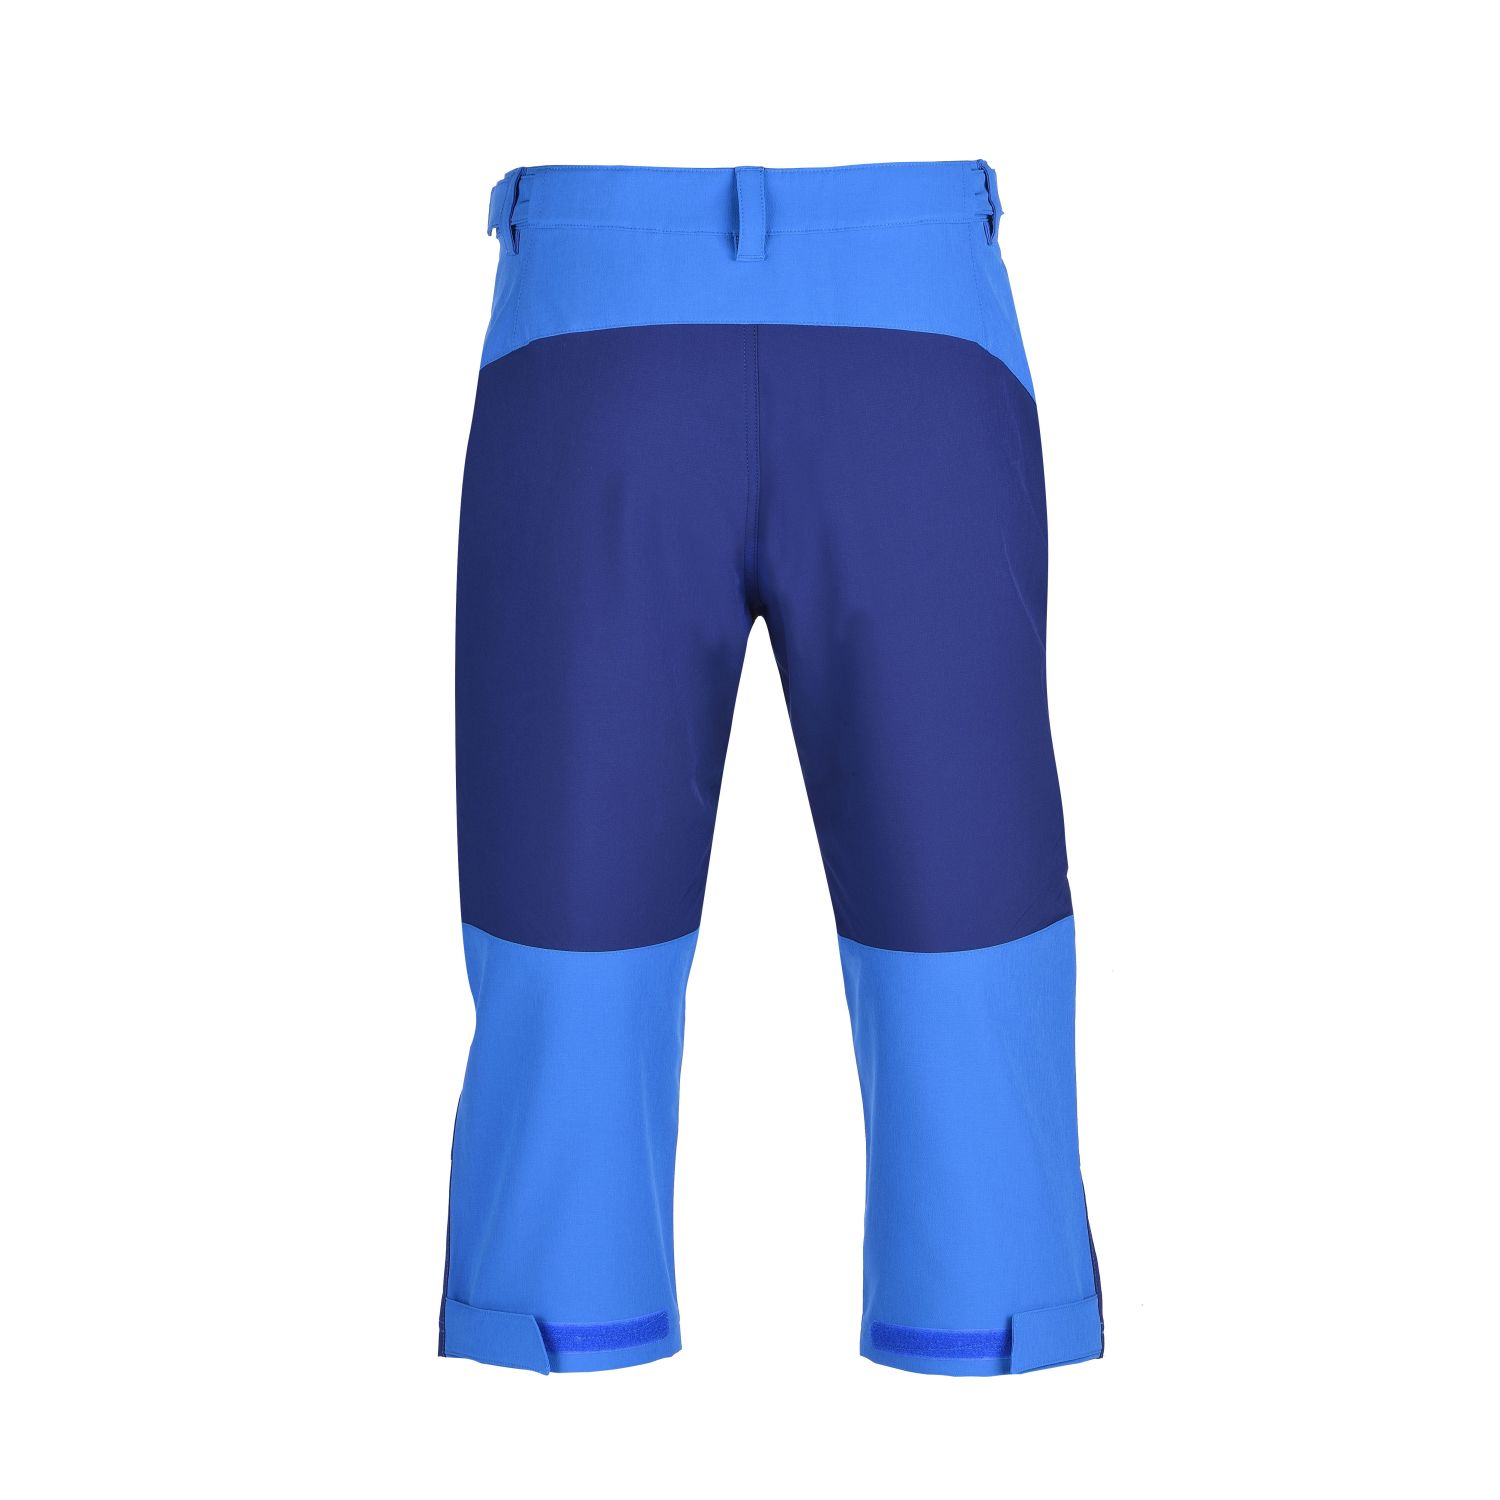 Norheim Granite Technical Men’s Shorts blue france